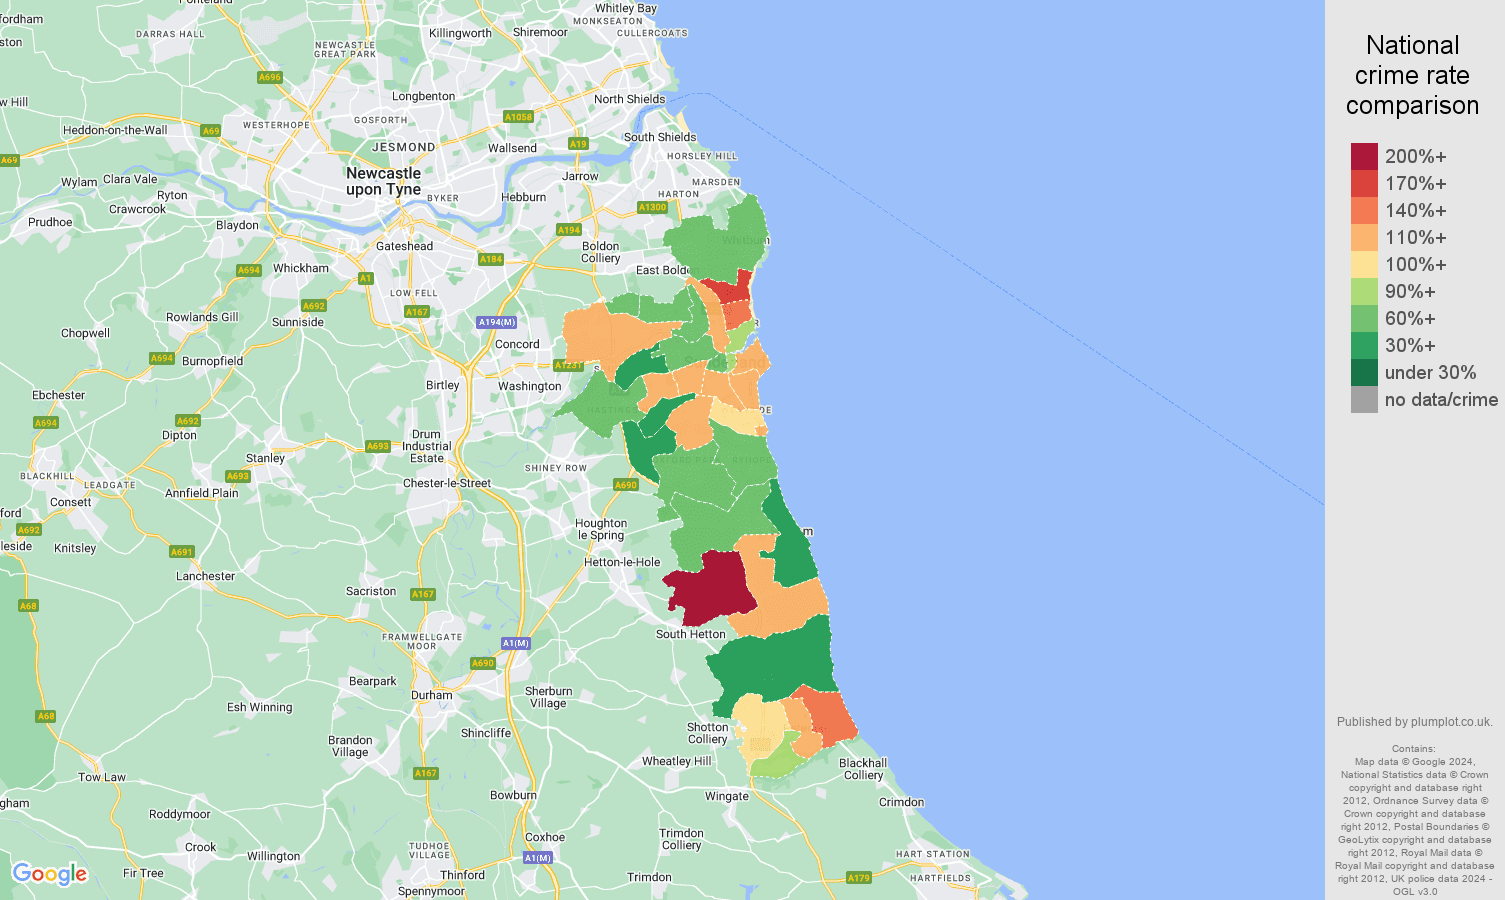 Sunderland vehicle crime rate comparison map